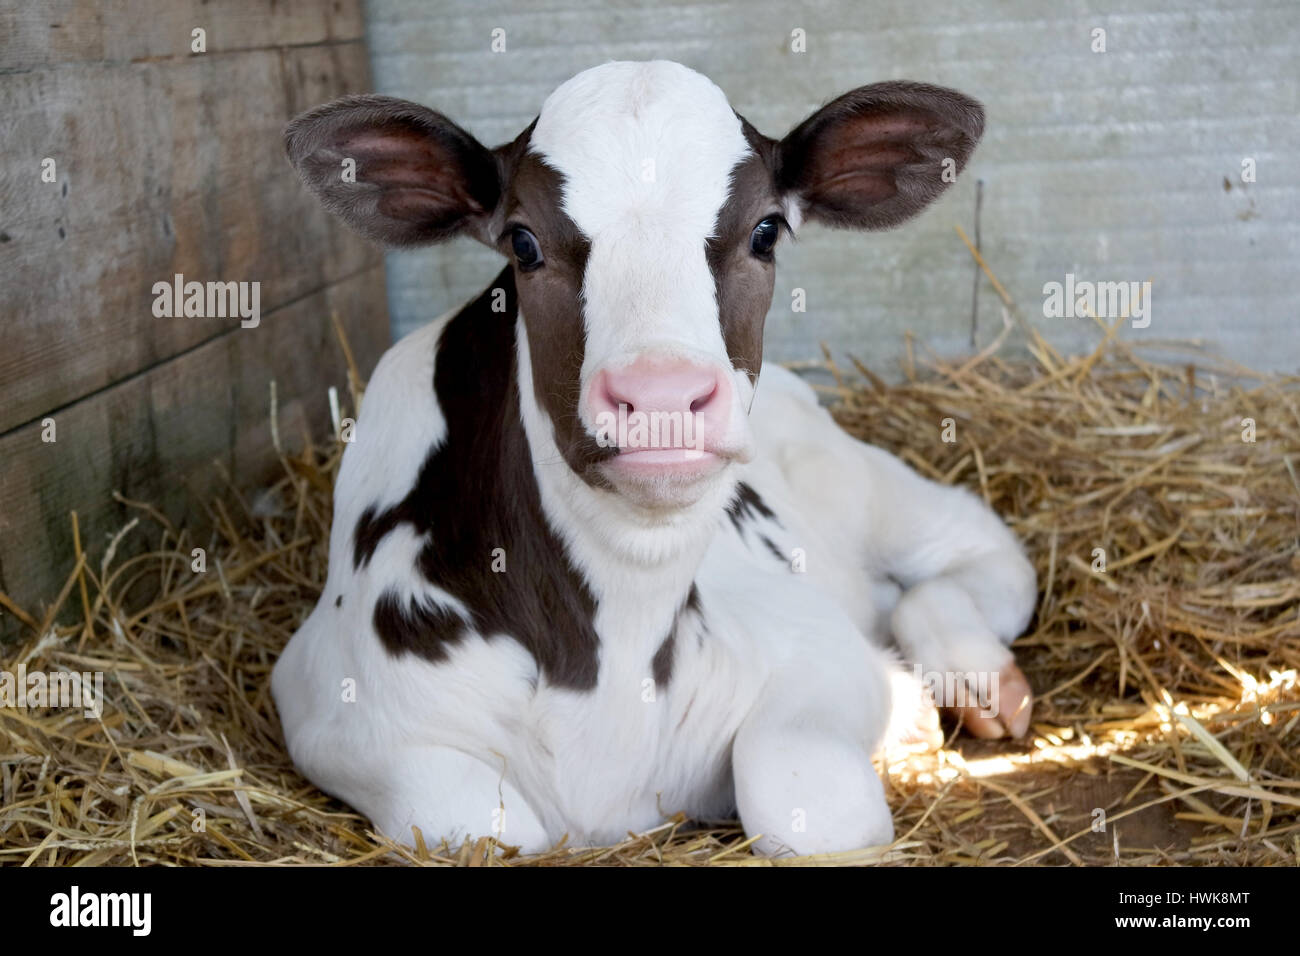 Baby Kuh Kalb in einem Käfig. Stockfoto